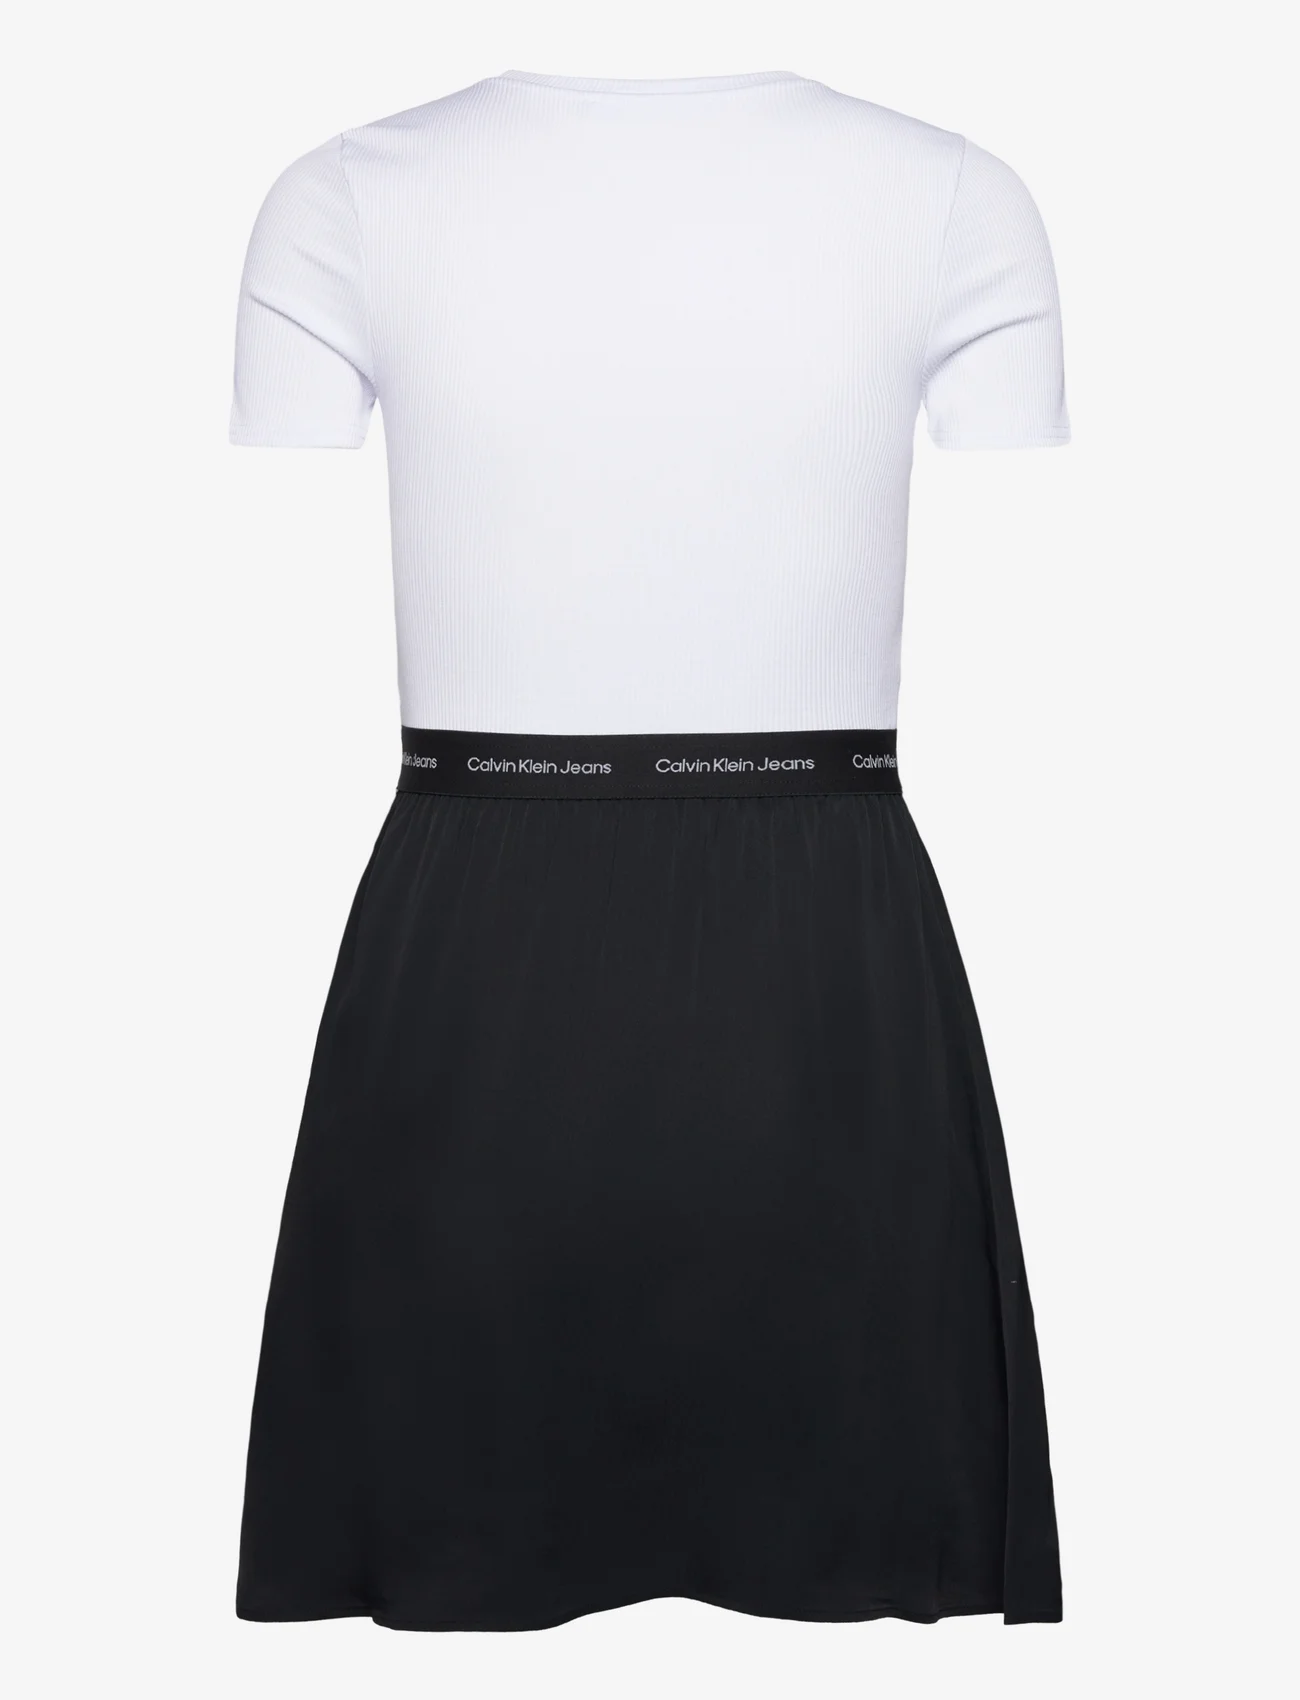 Calvin Klein Jeans - LOGO ELASTIC SHORT SLEEVE DRESS - Īsas kleitas - bright white / ck black - 1